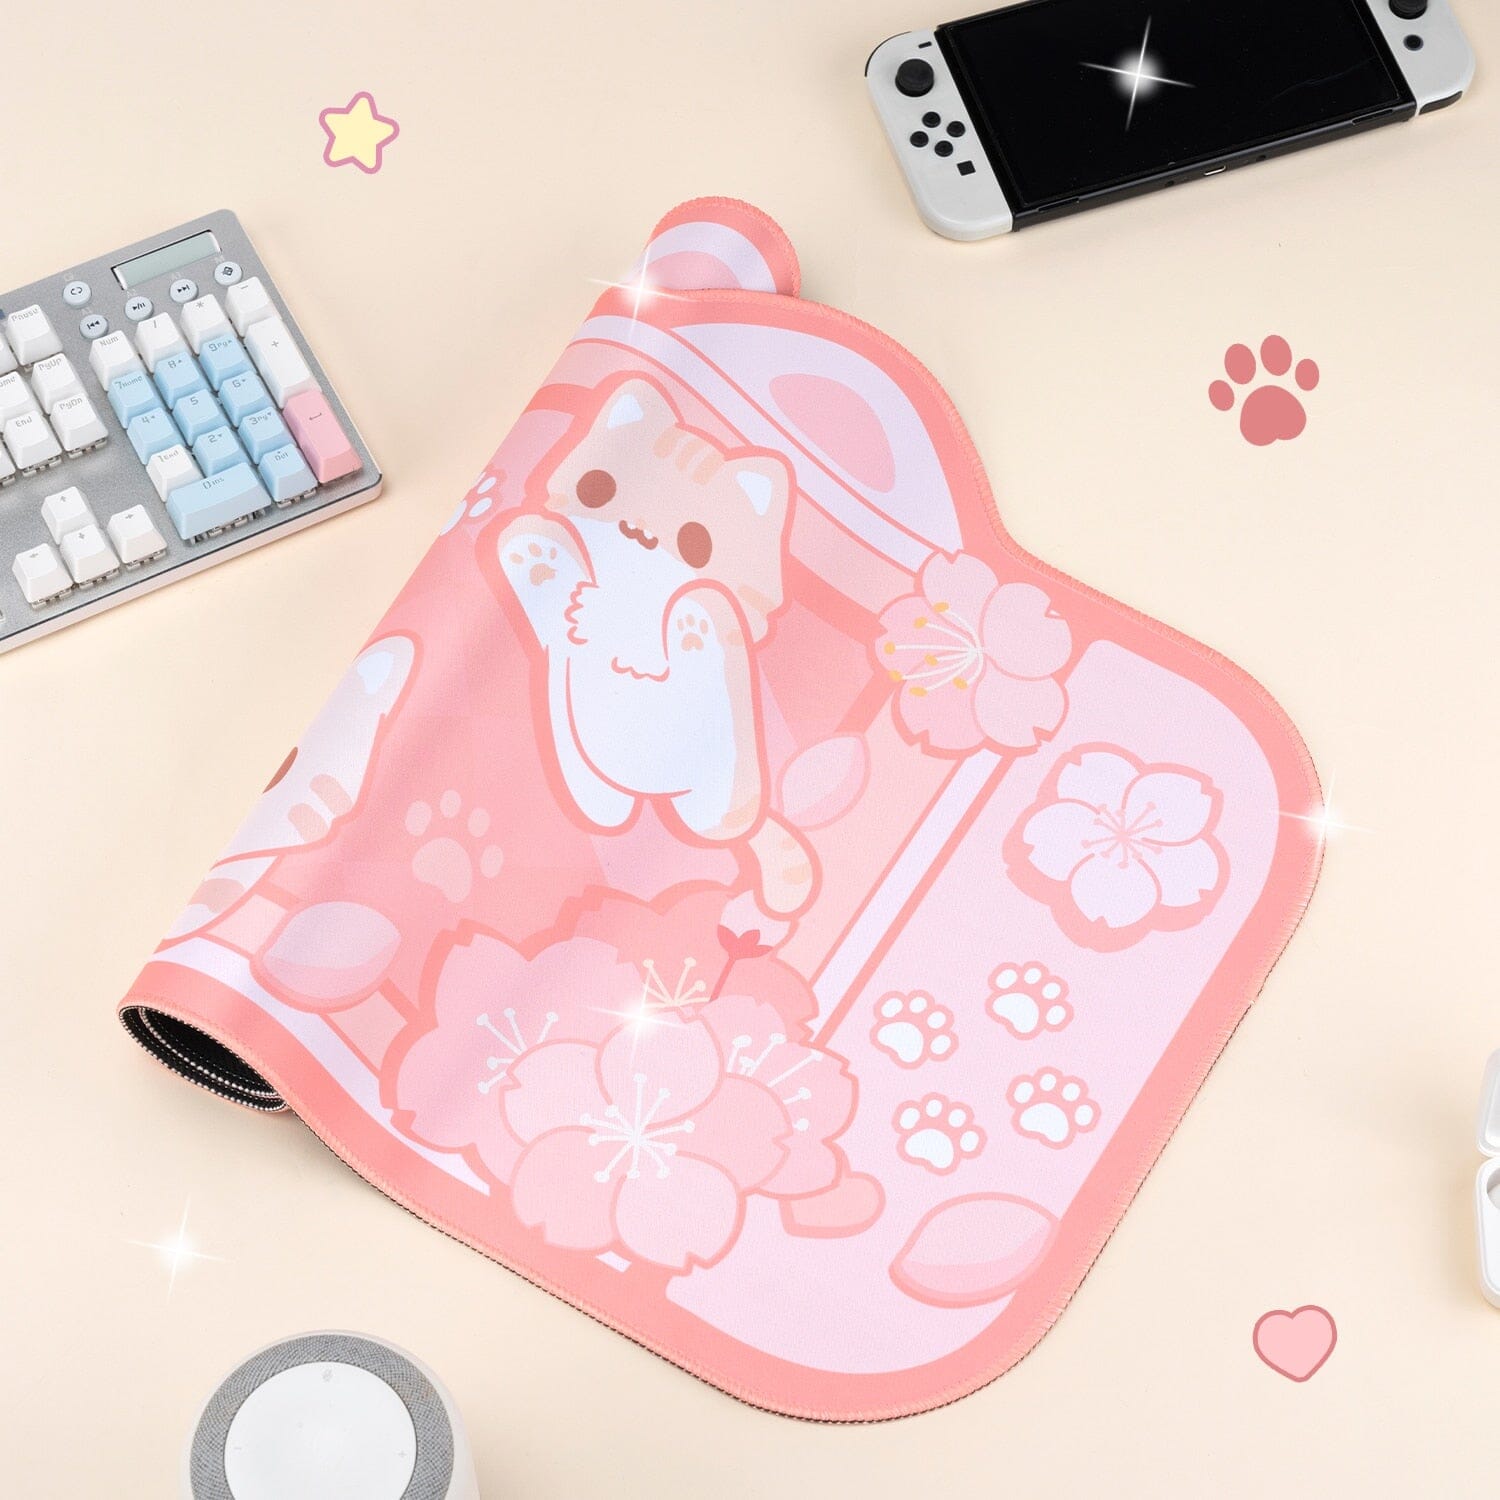 Extra Large Kawaii Gaming Mouse Pad Cute Pastel Pink Sakura Cat XXL Big Desk Mat Water Proof Nonslip Laptop Desk Accessories 0 GatoGeek 